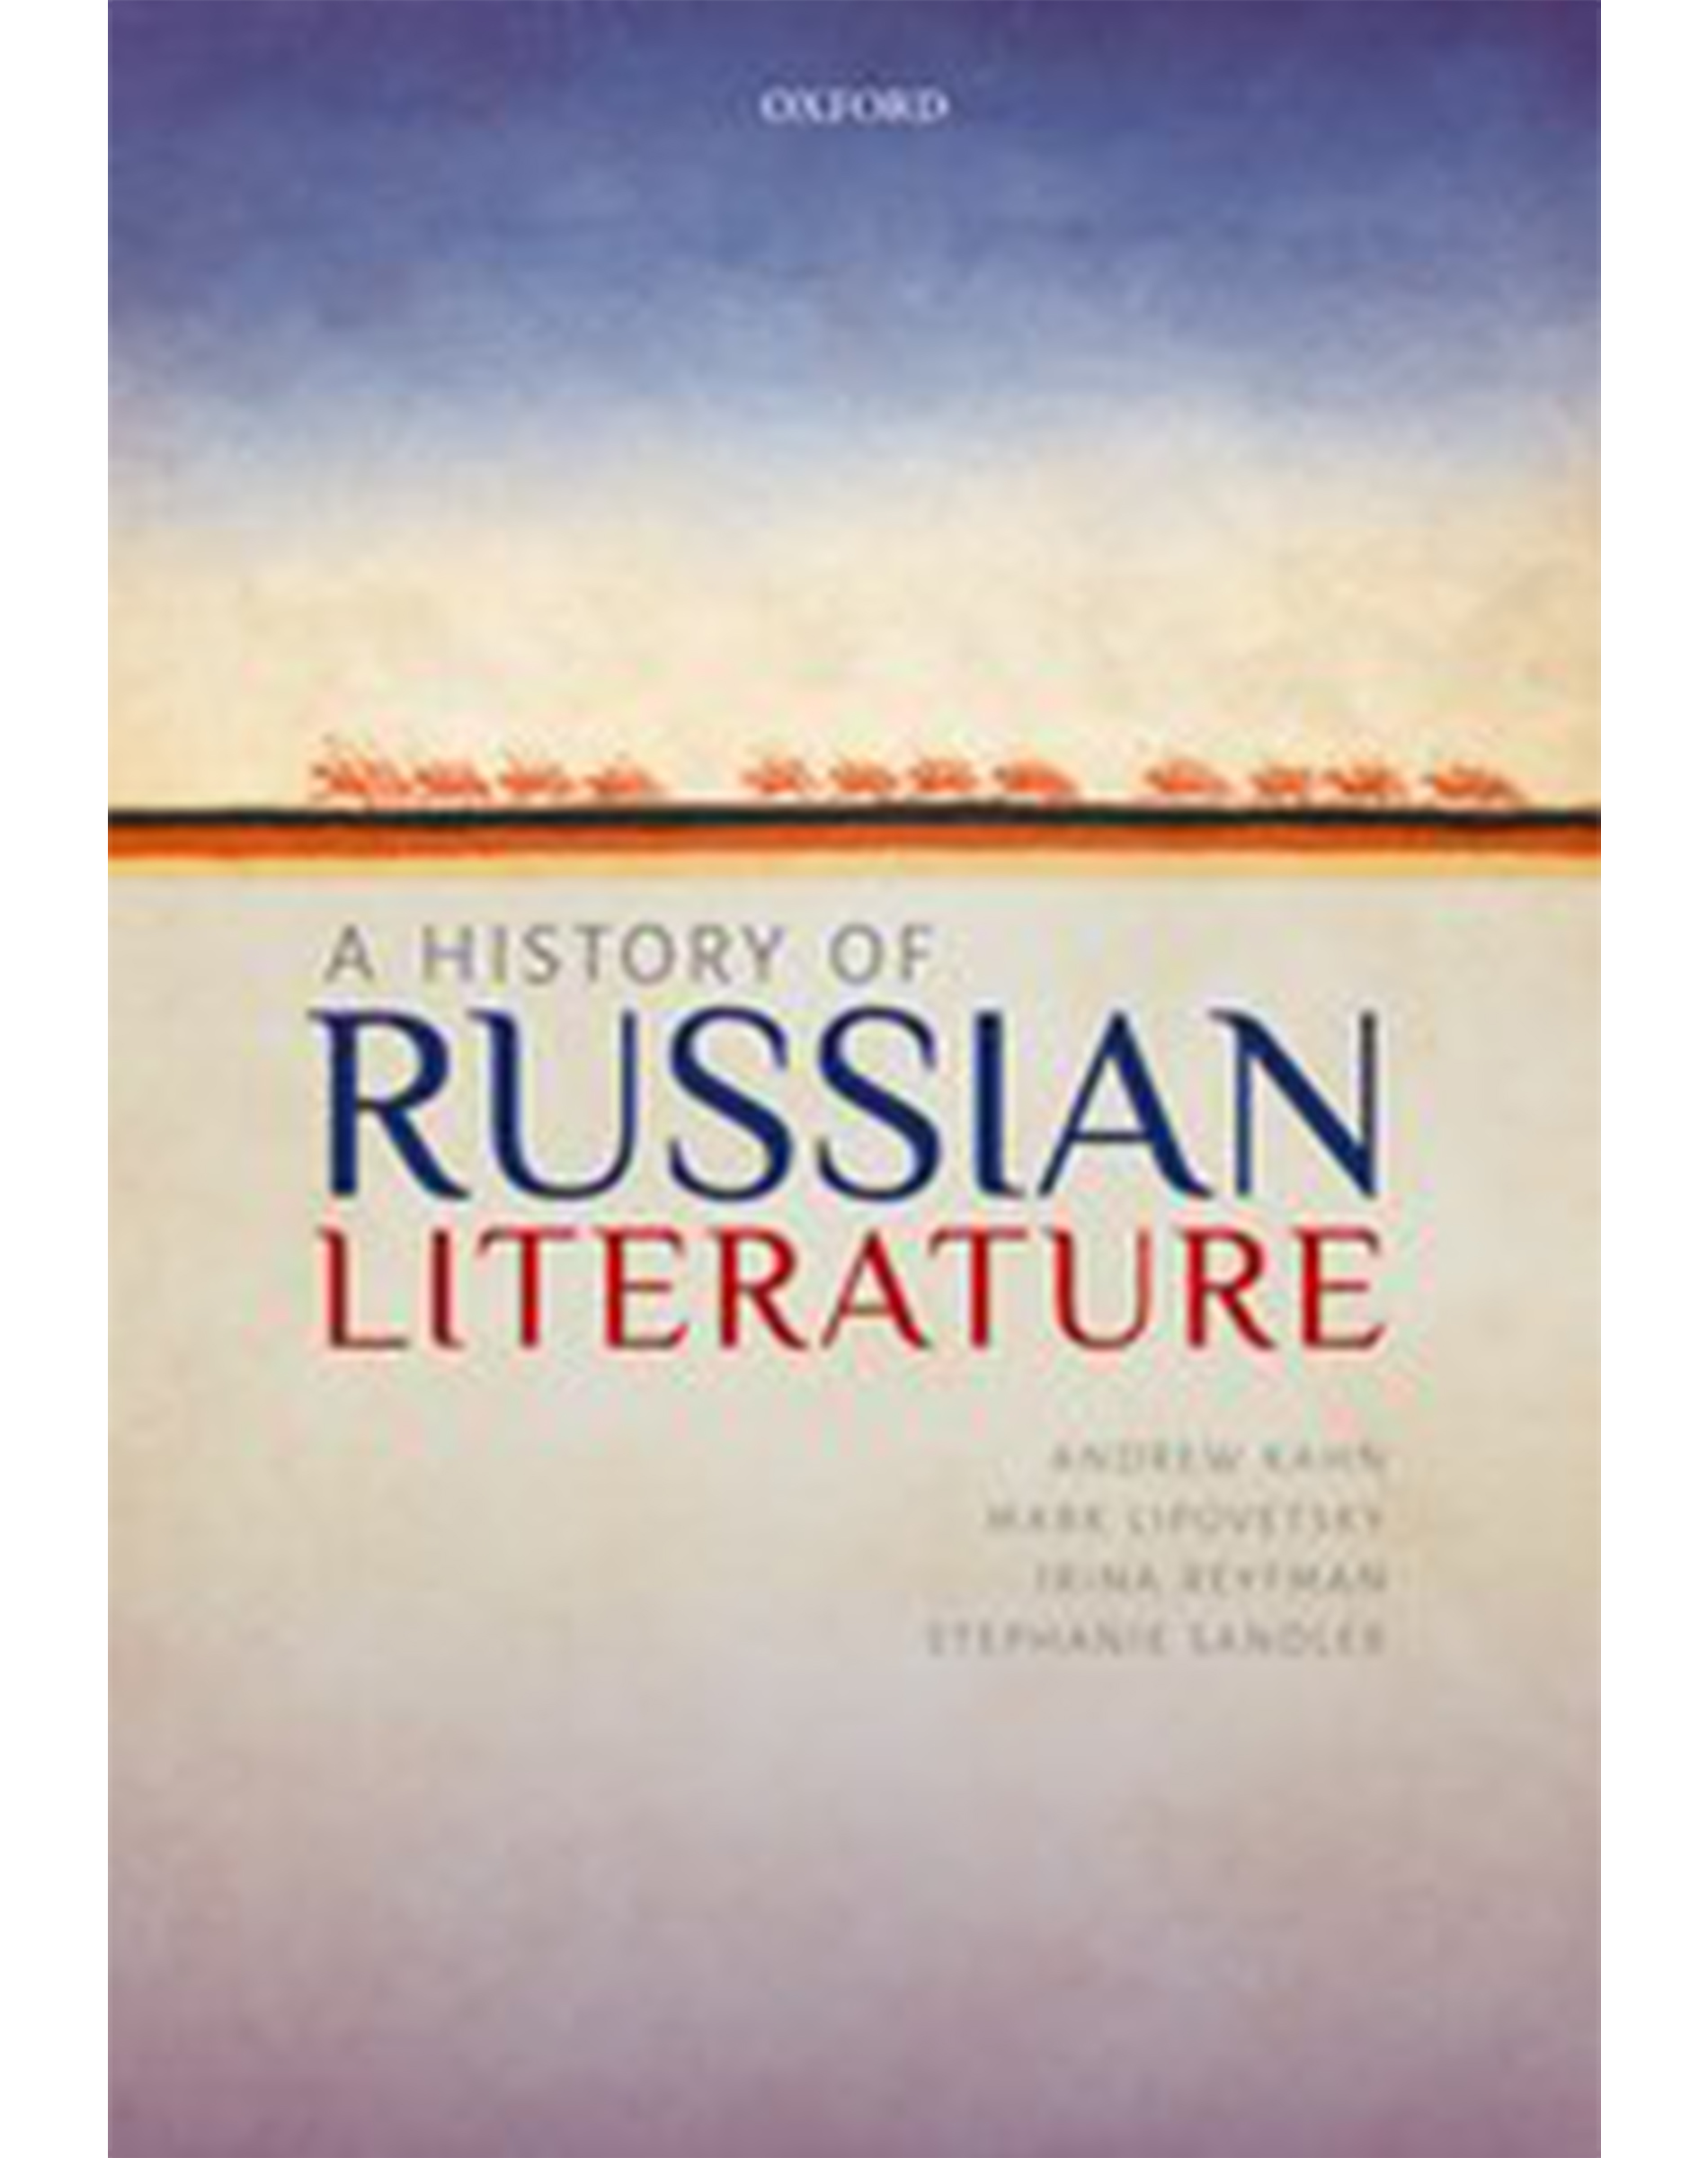 phd in russian literature